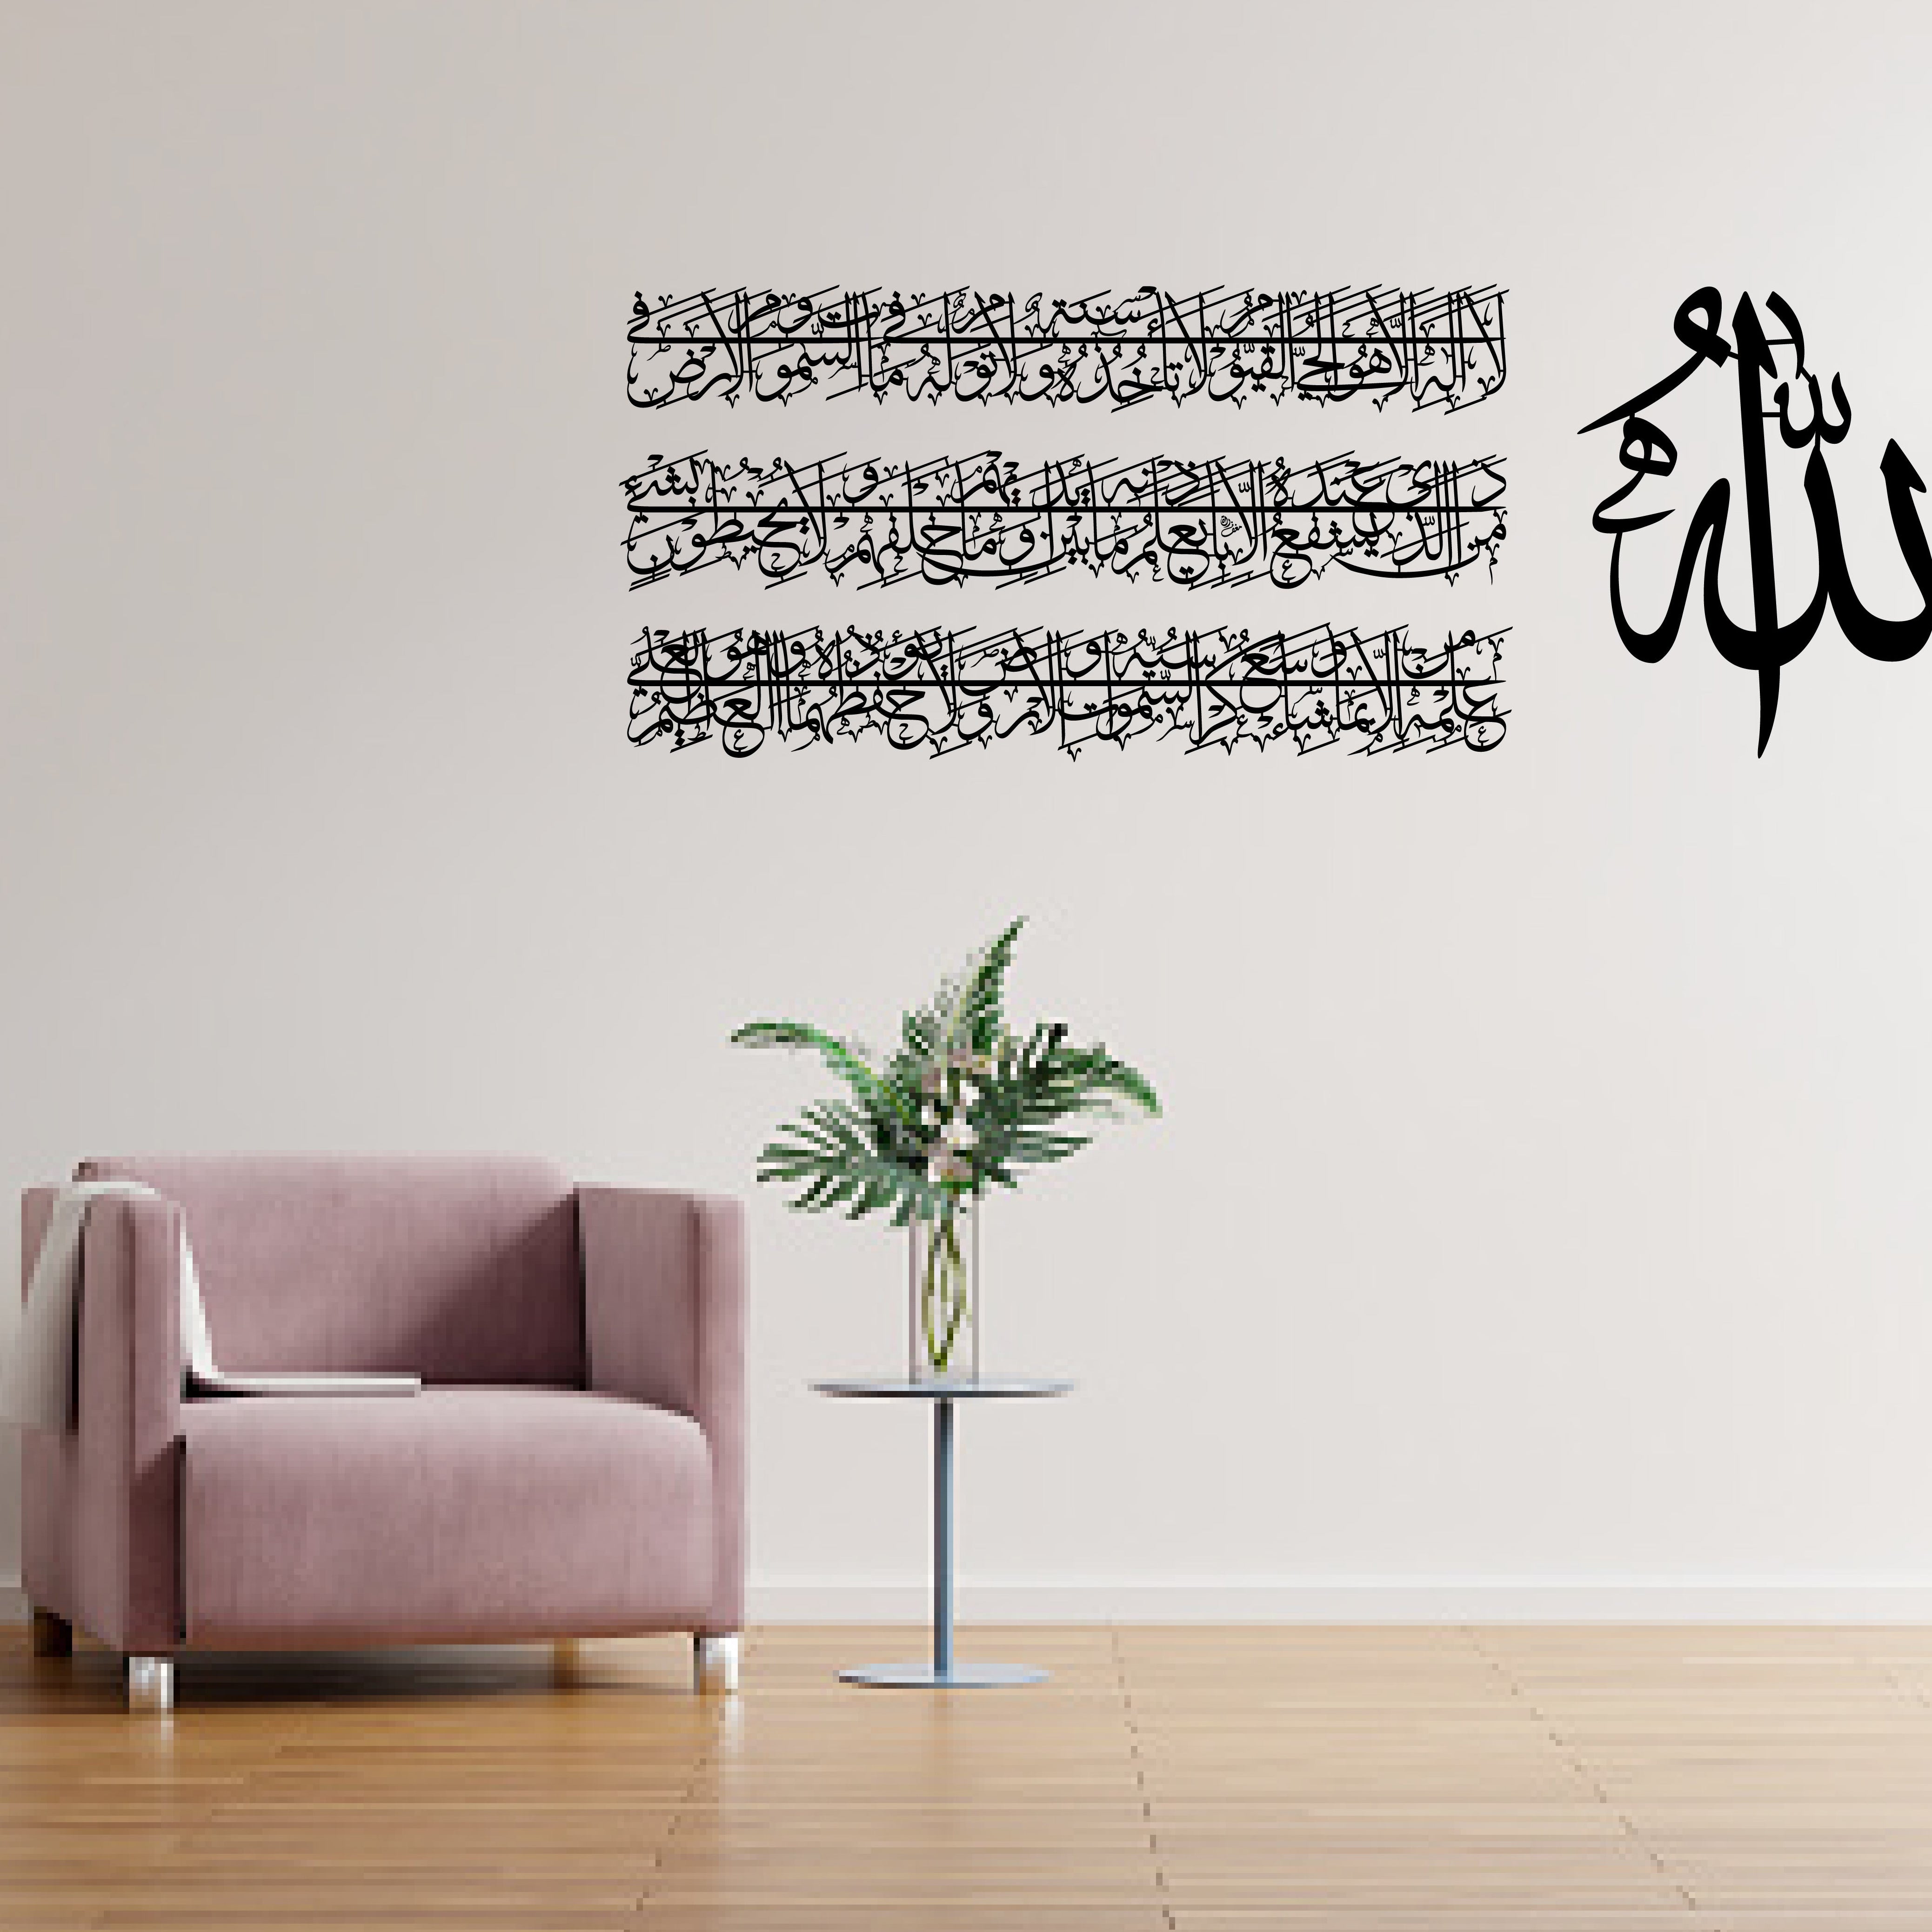 Ayatul Kursi Wall Art Latest Edition Horizental Style with Allah Name